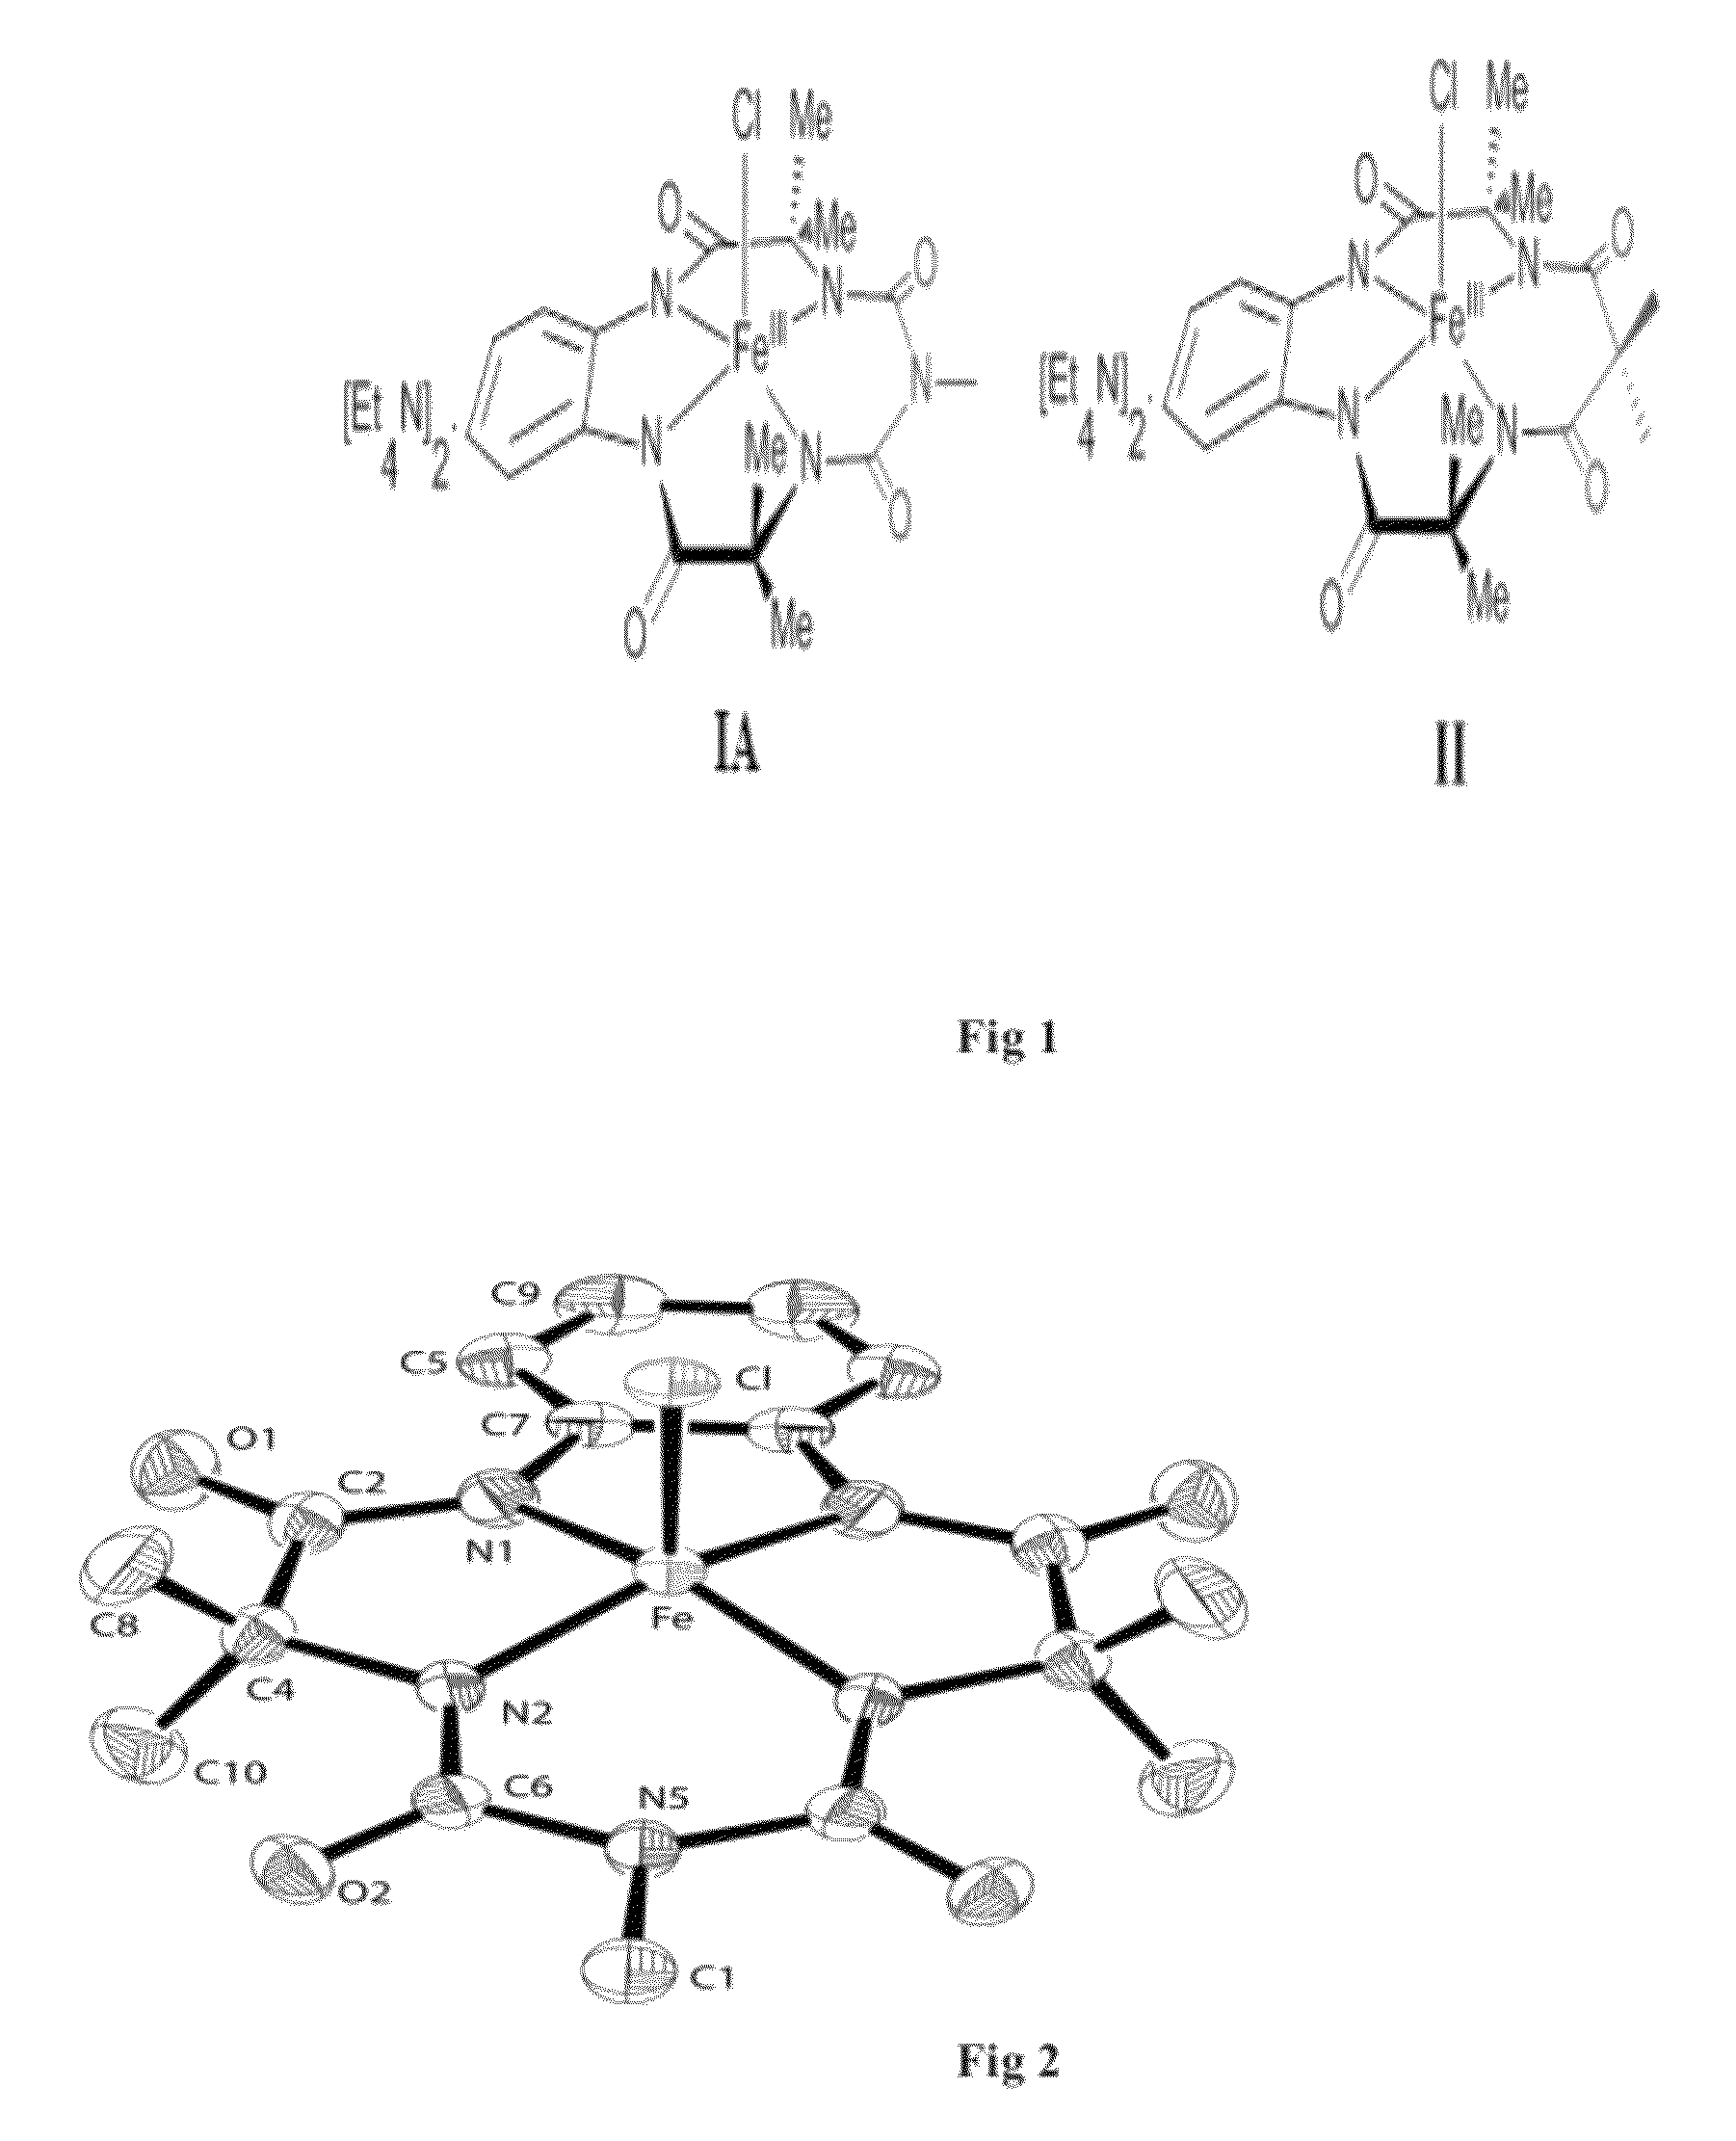 Metal (III) complex of biuret-amide based macrocyclic ligand as green oxidation catalyst